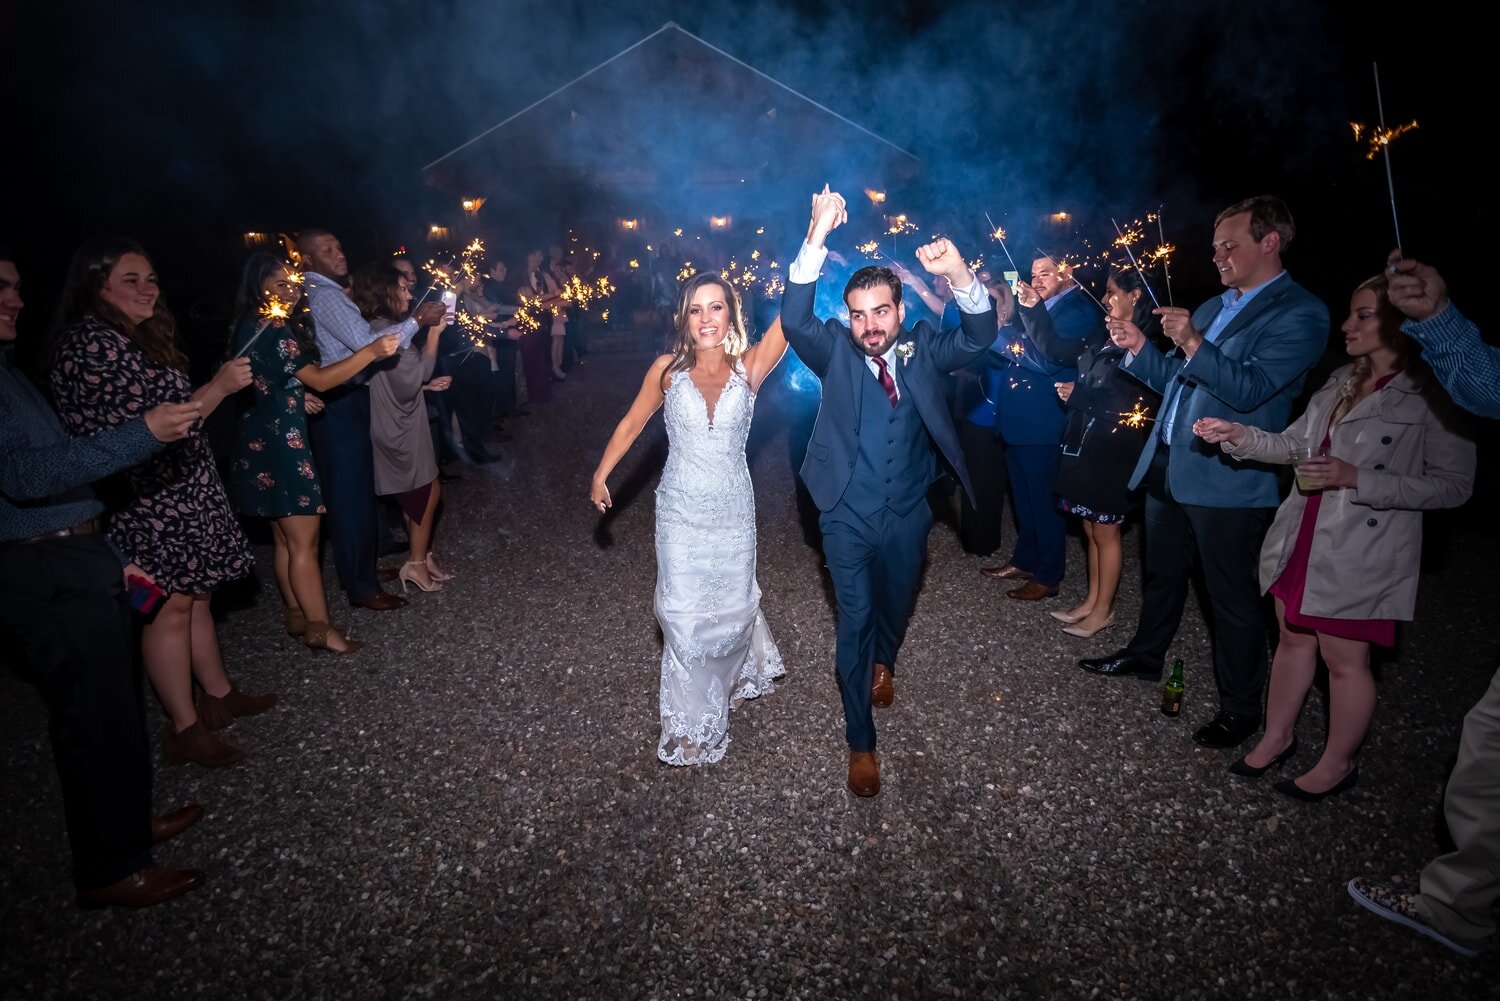 bride-groom-happy-wedding-exit-sparklers-night-dark-thesprings-chadandbriephotography.jpg